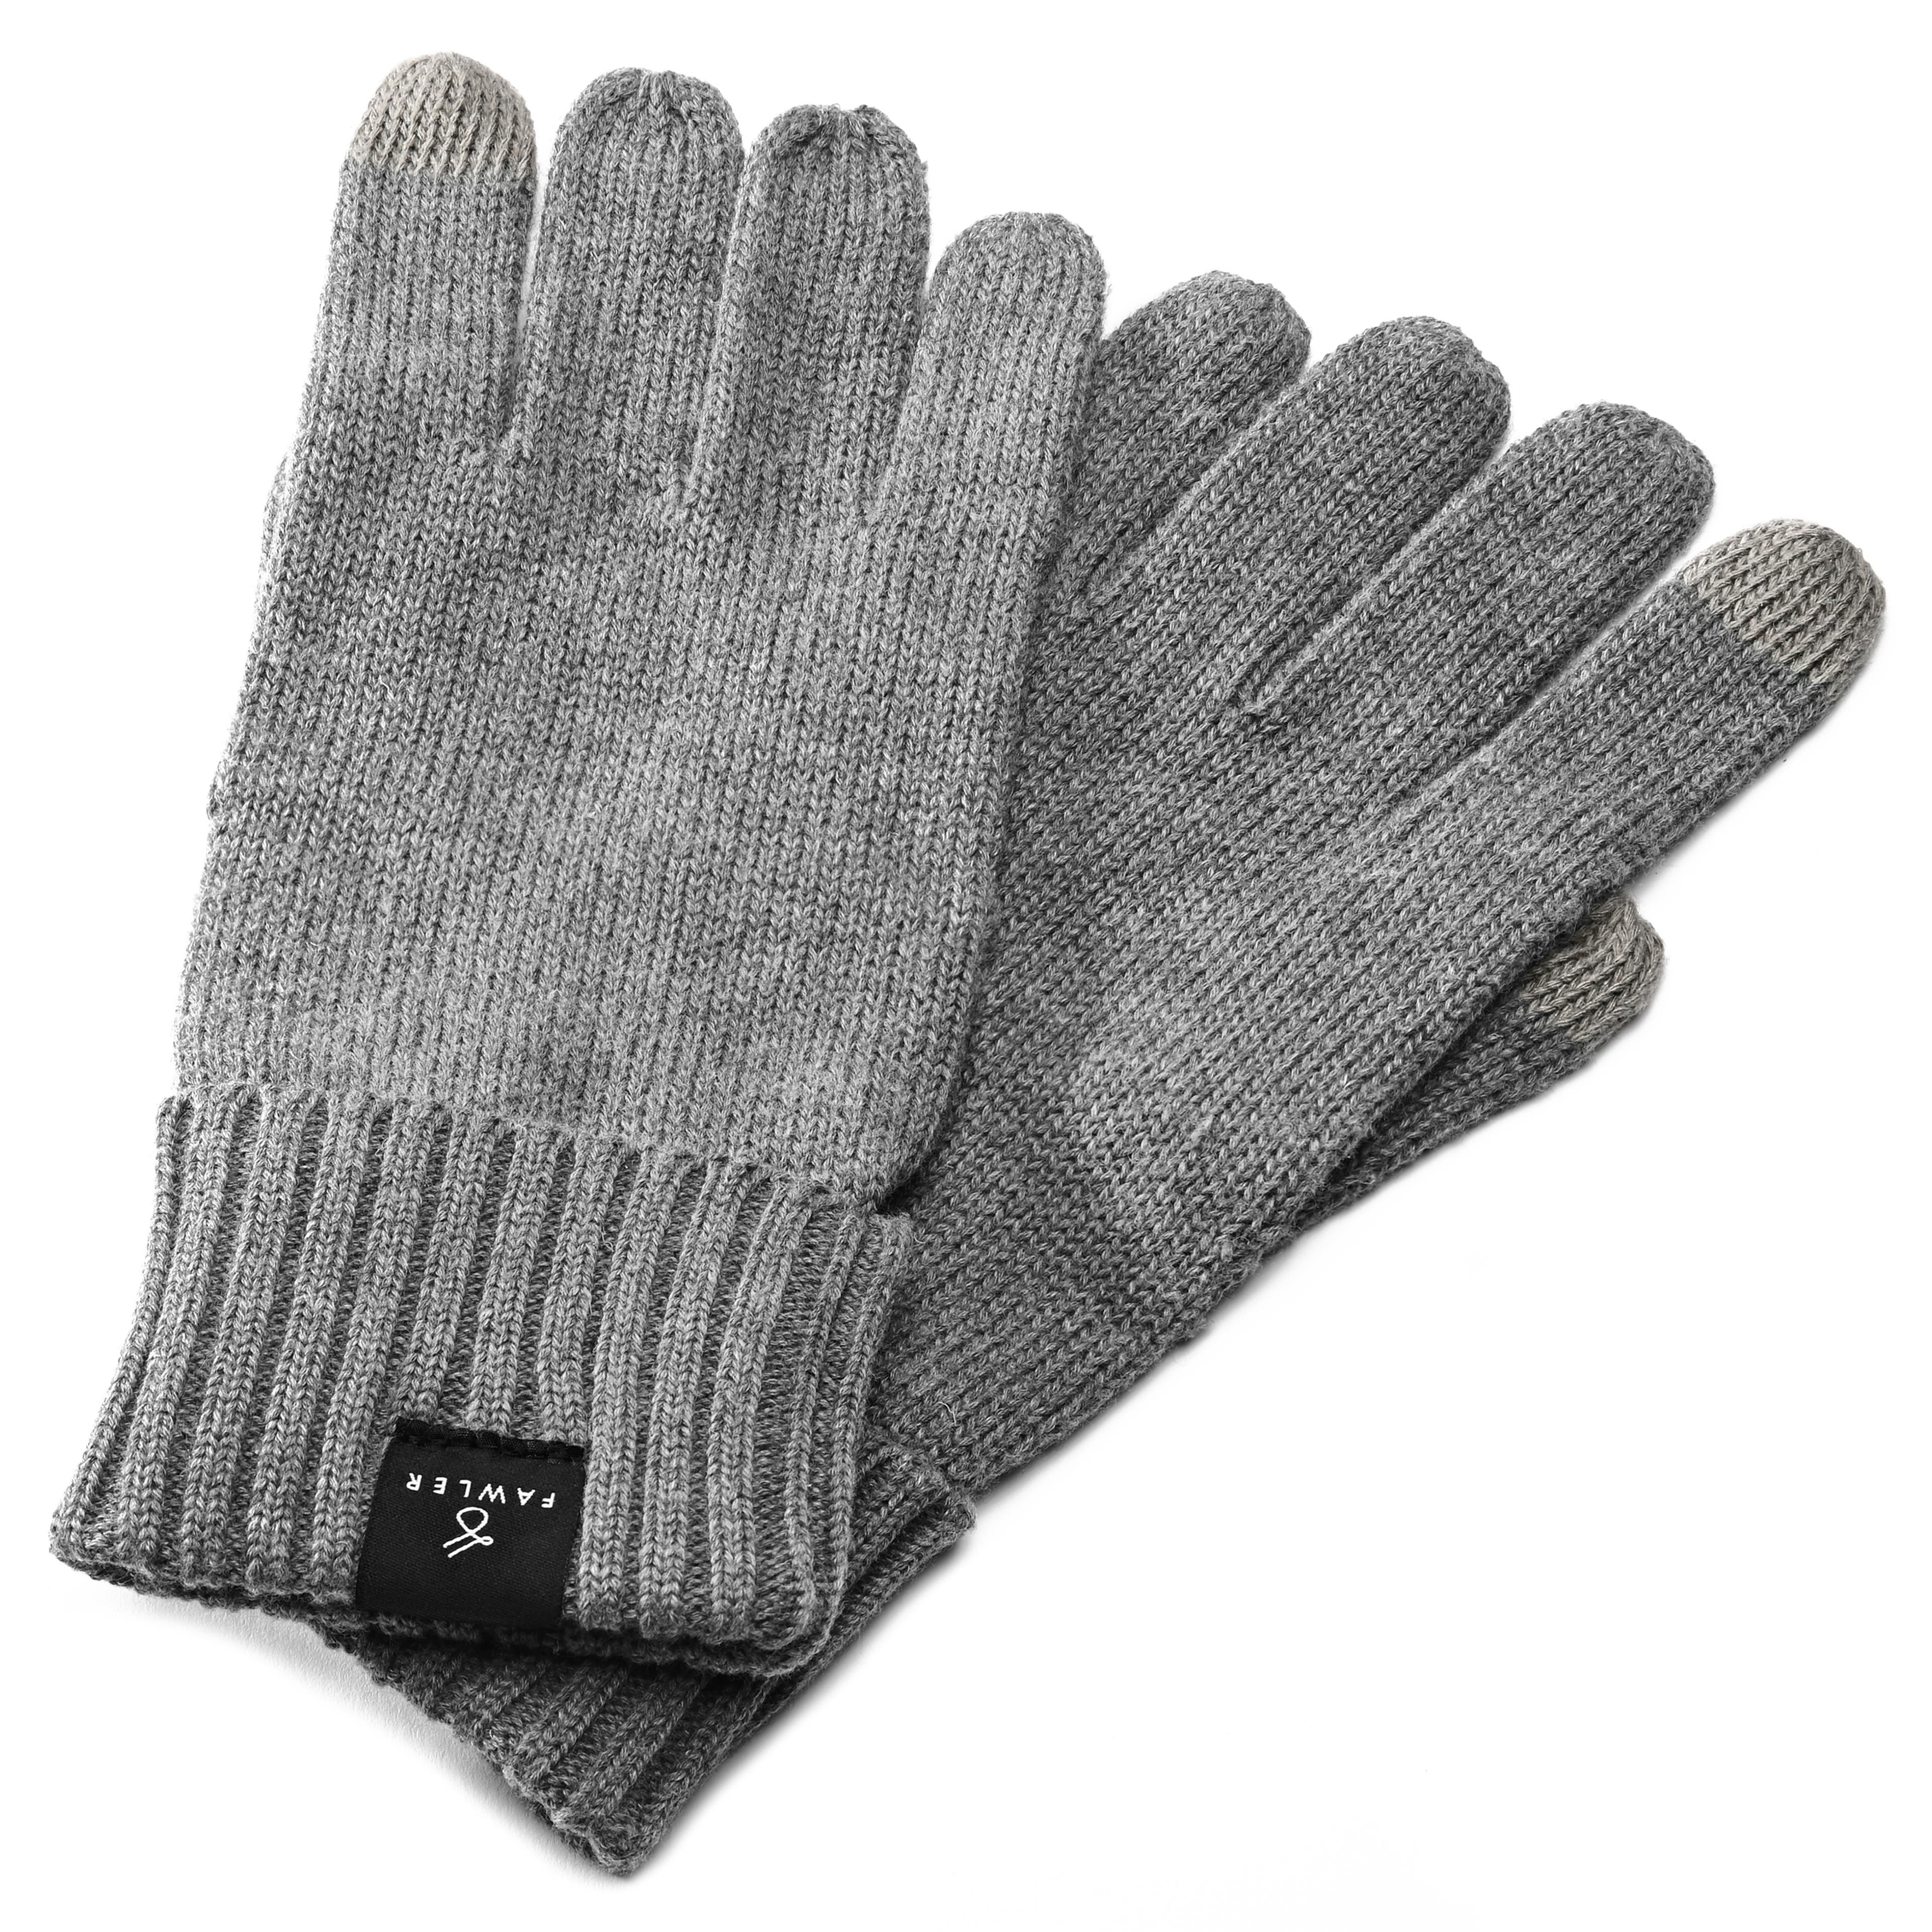 Dark Grey Knitted Cotton | | In Gloves Fawler stock